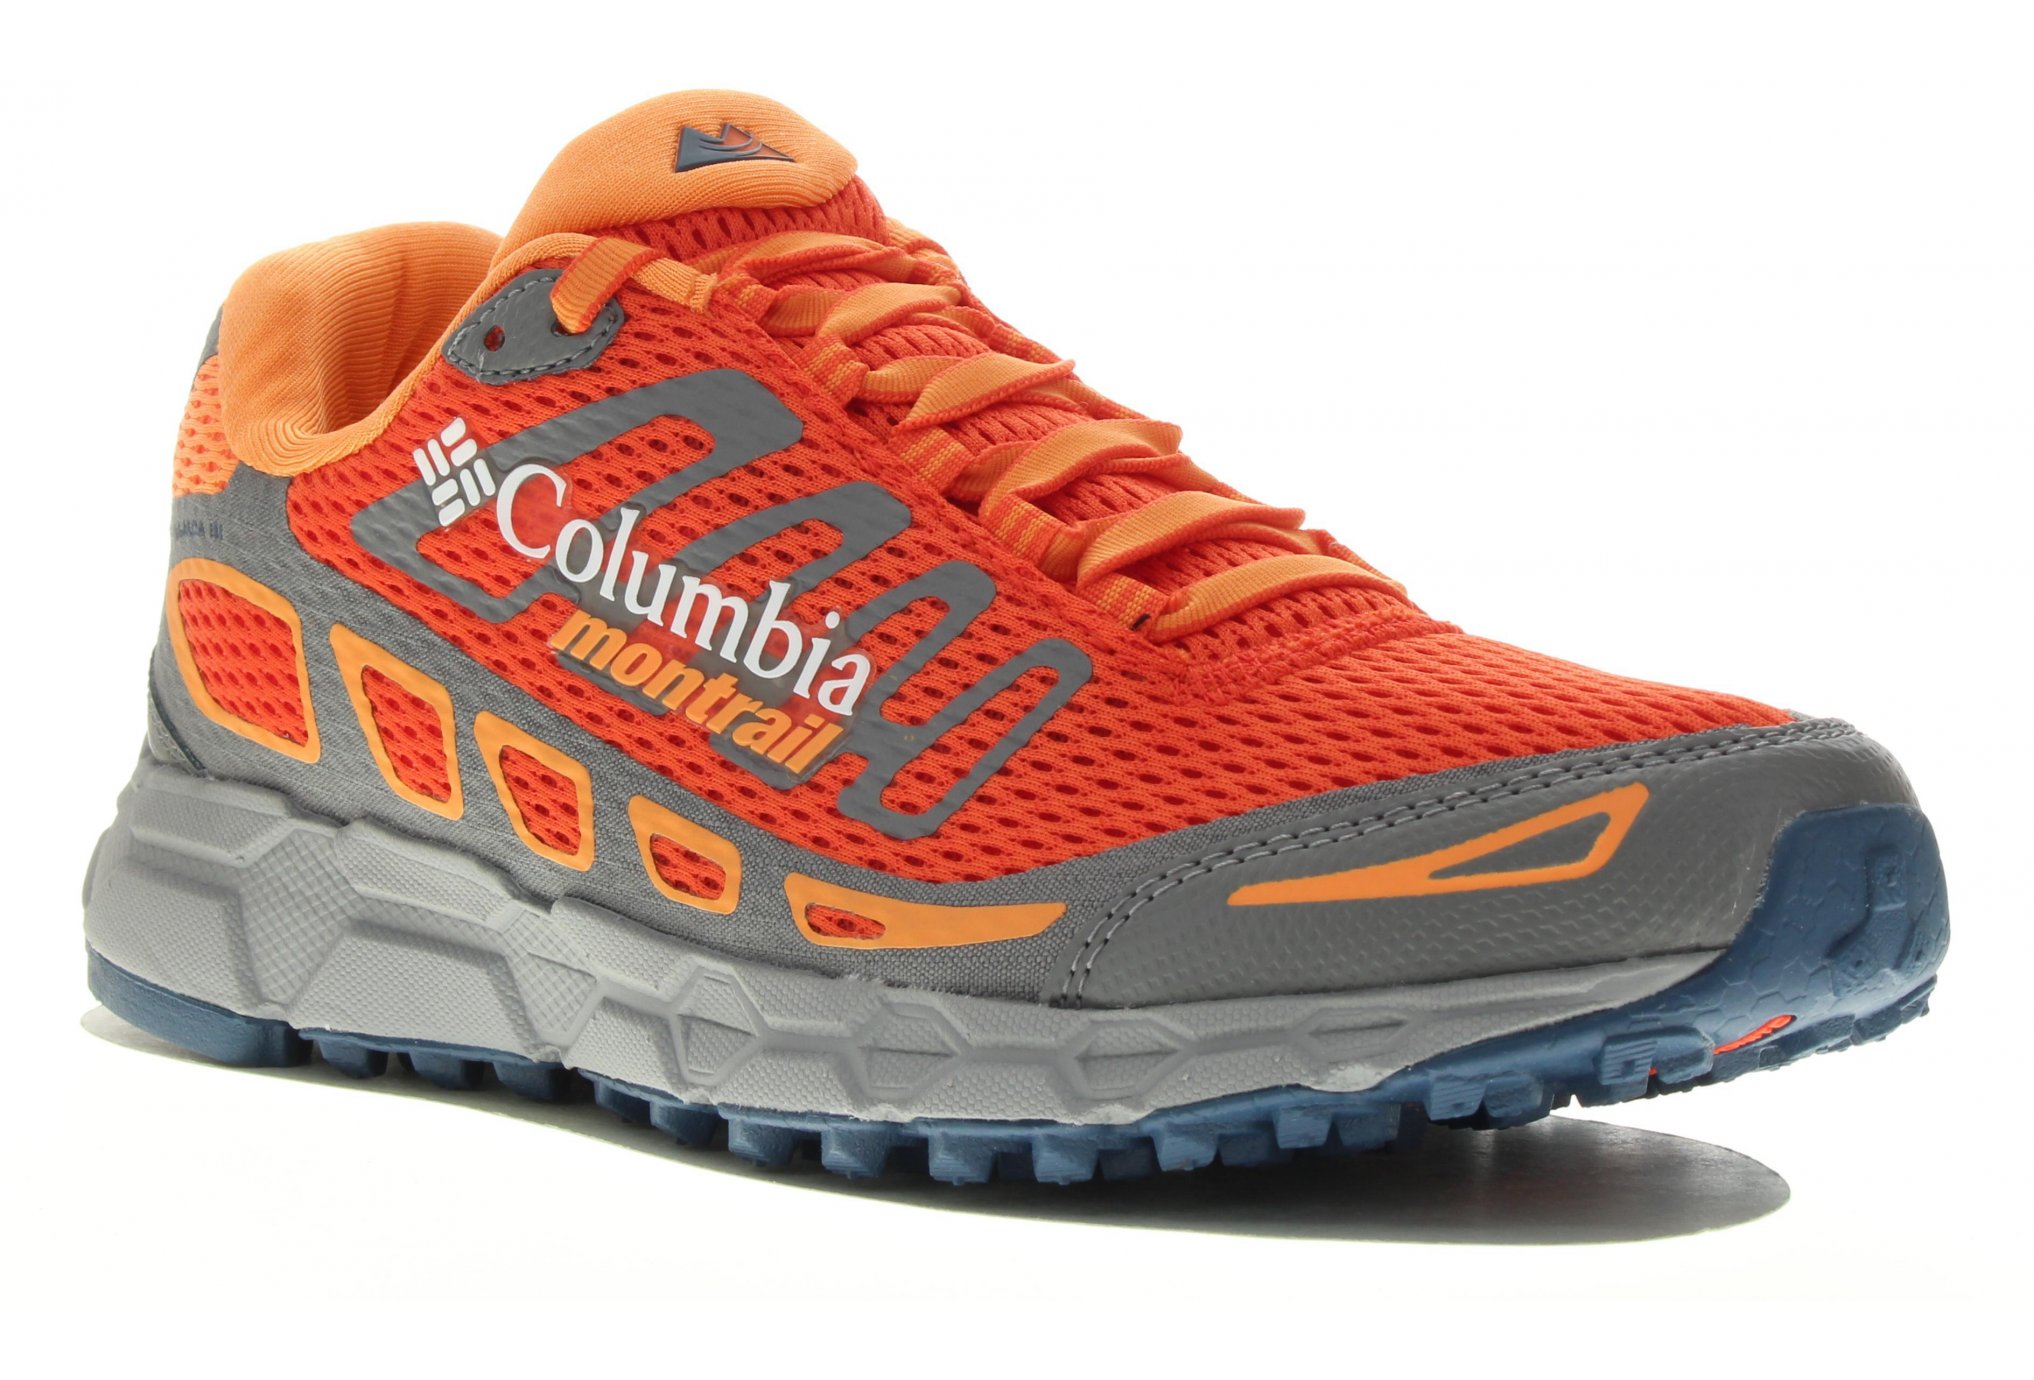 Columbia Montrail bajada iii w chaussures running femme